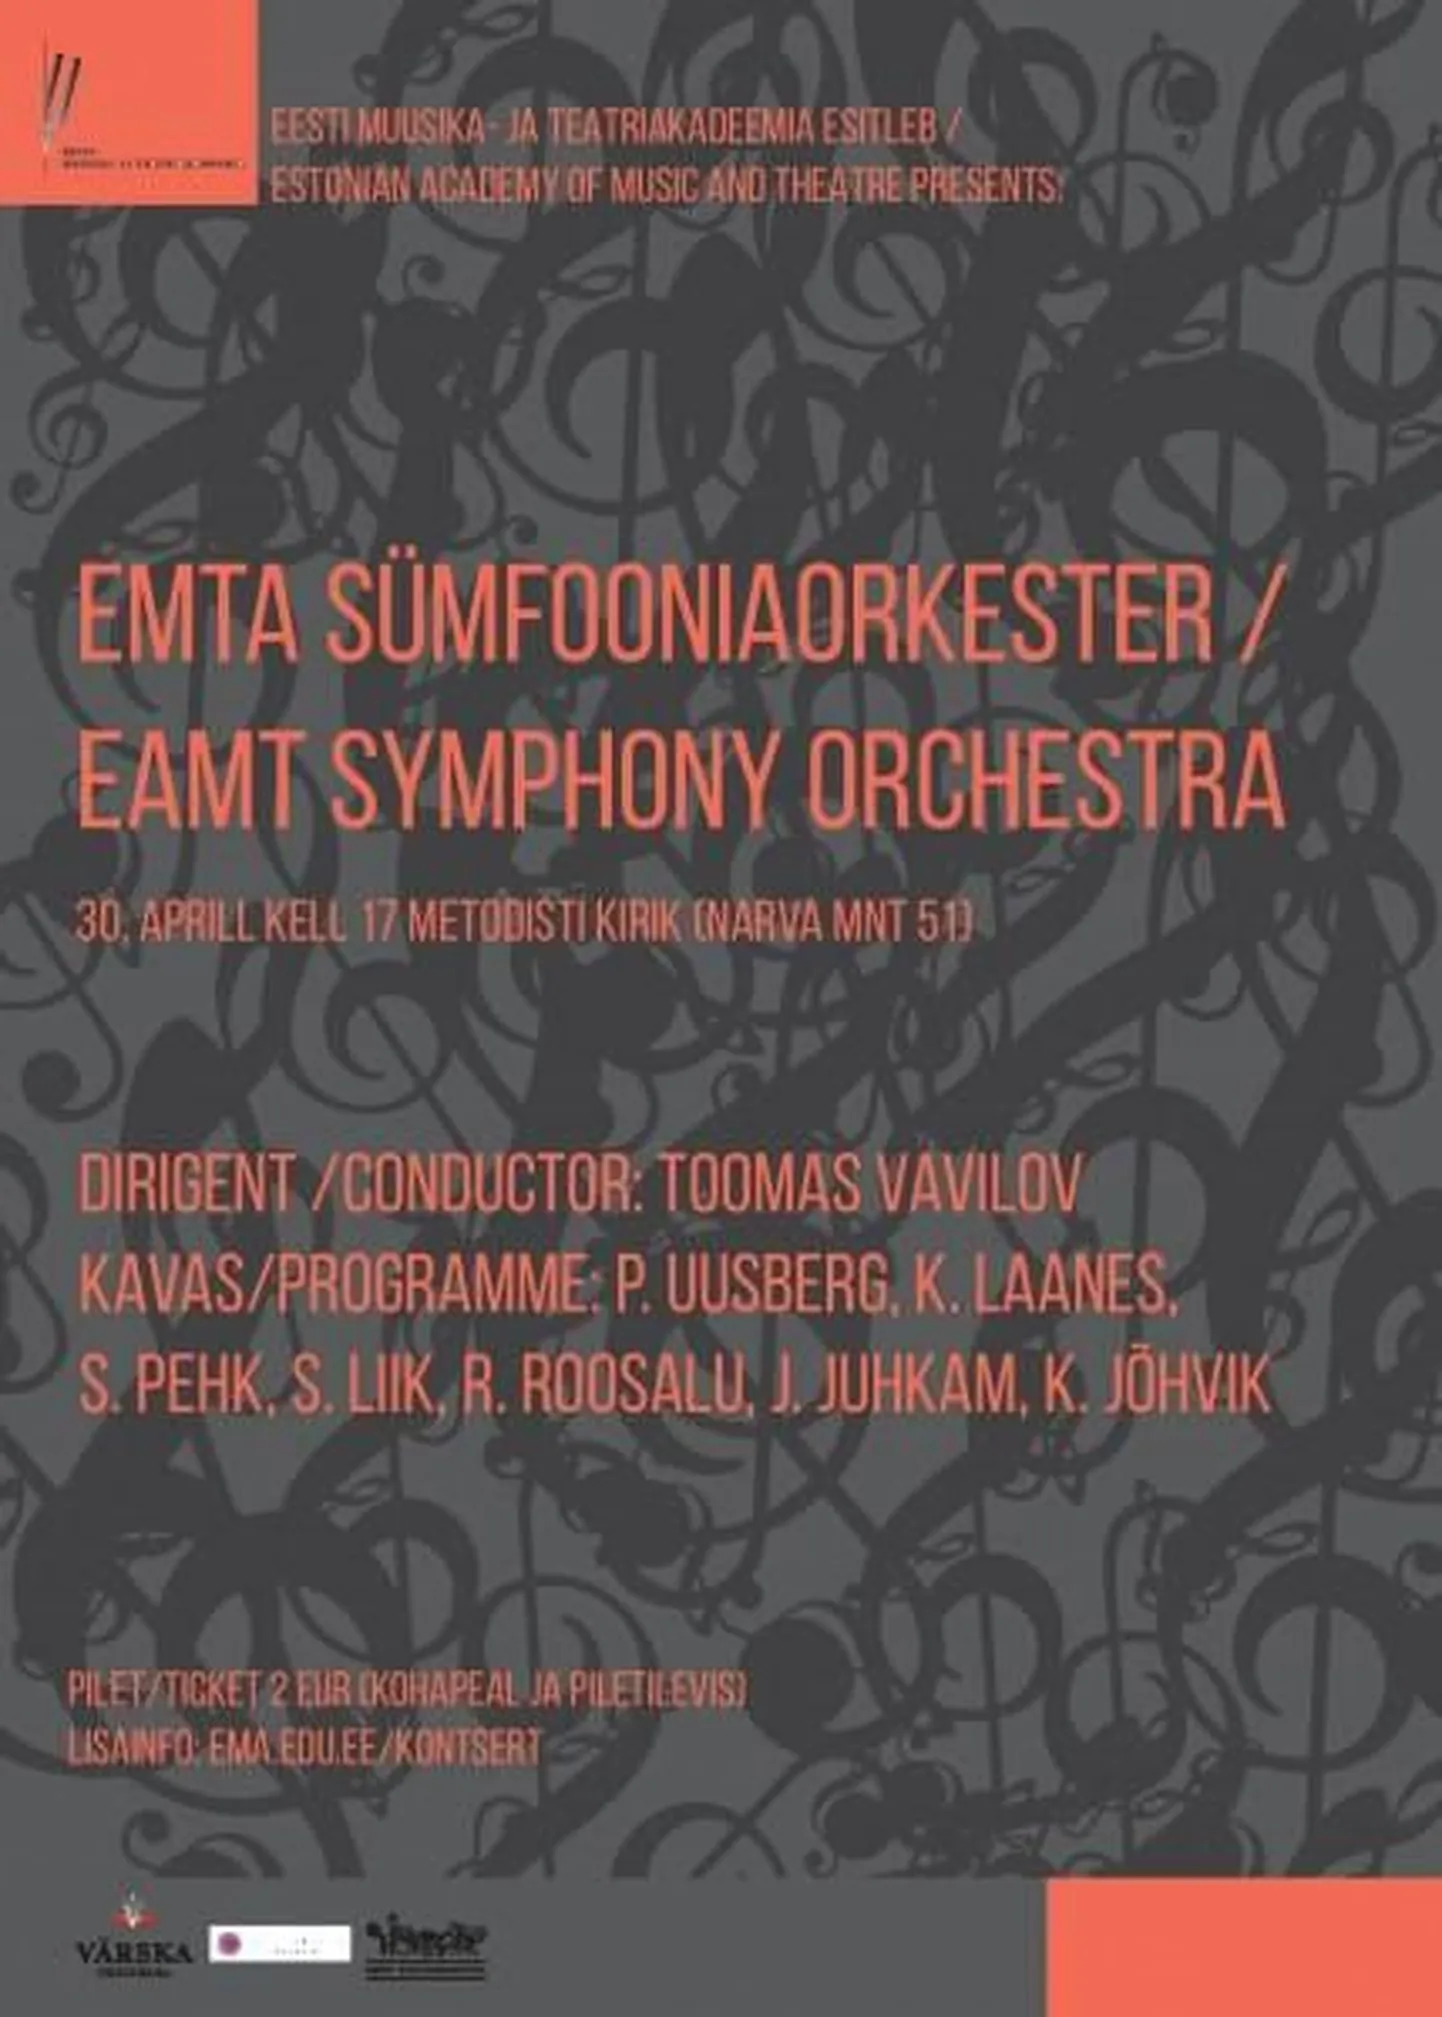 EMTA Sümfooniaorkester